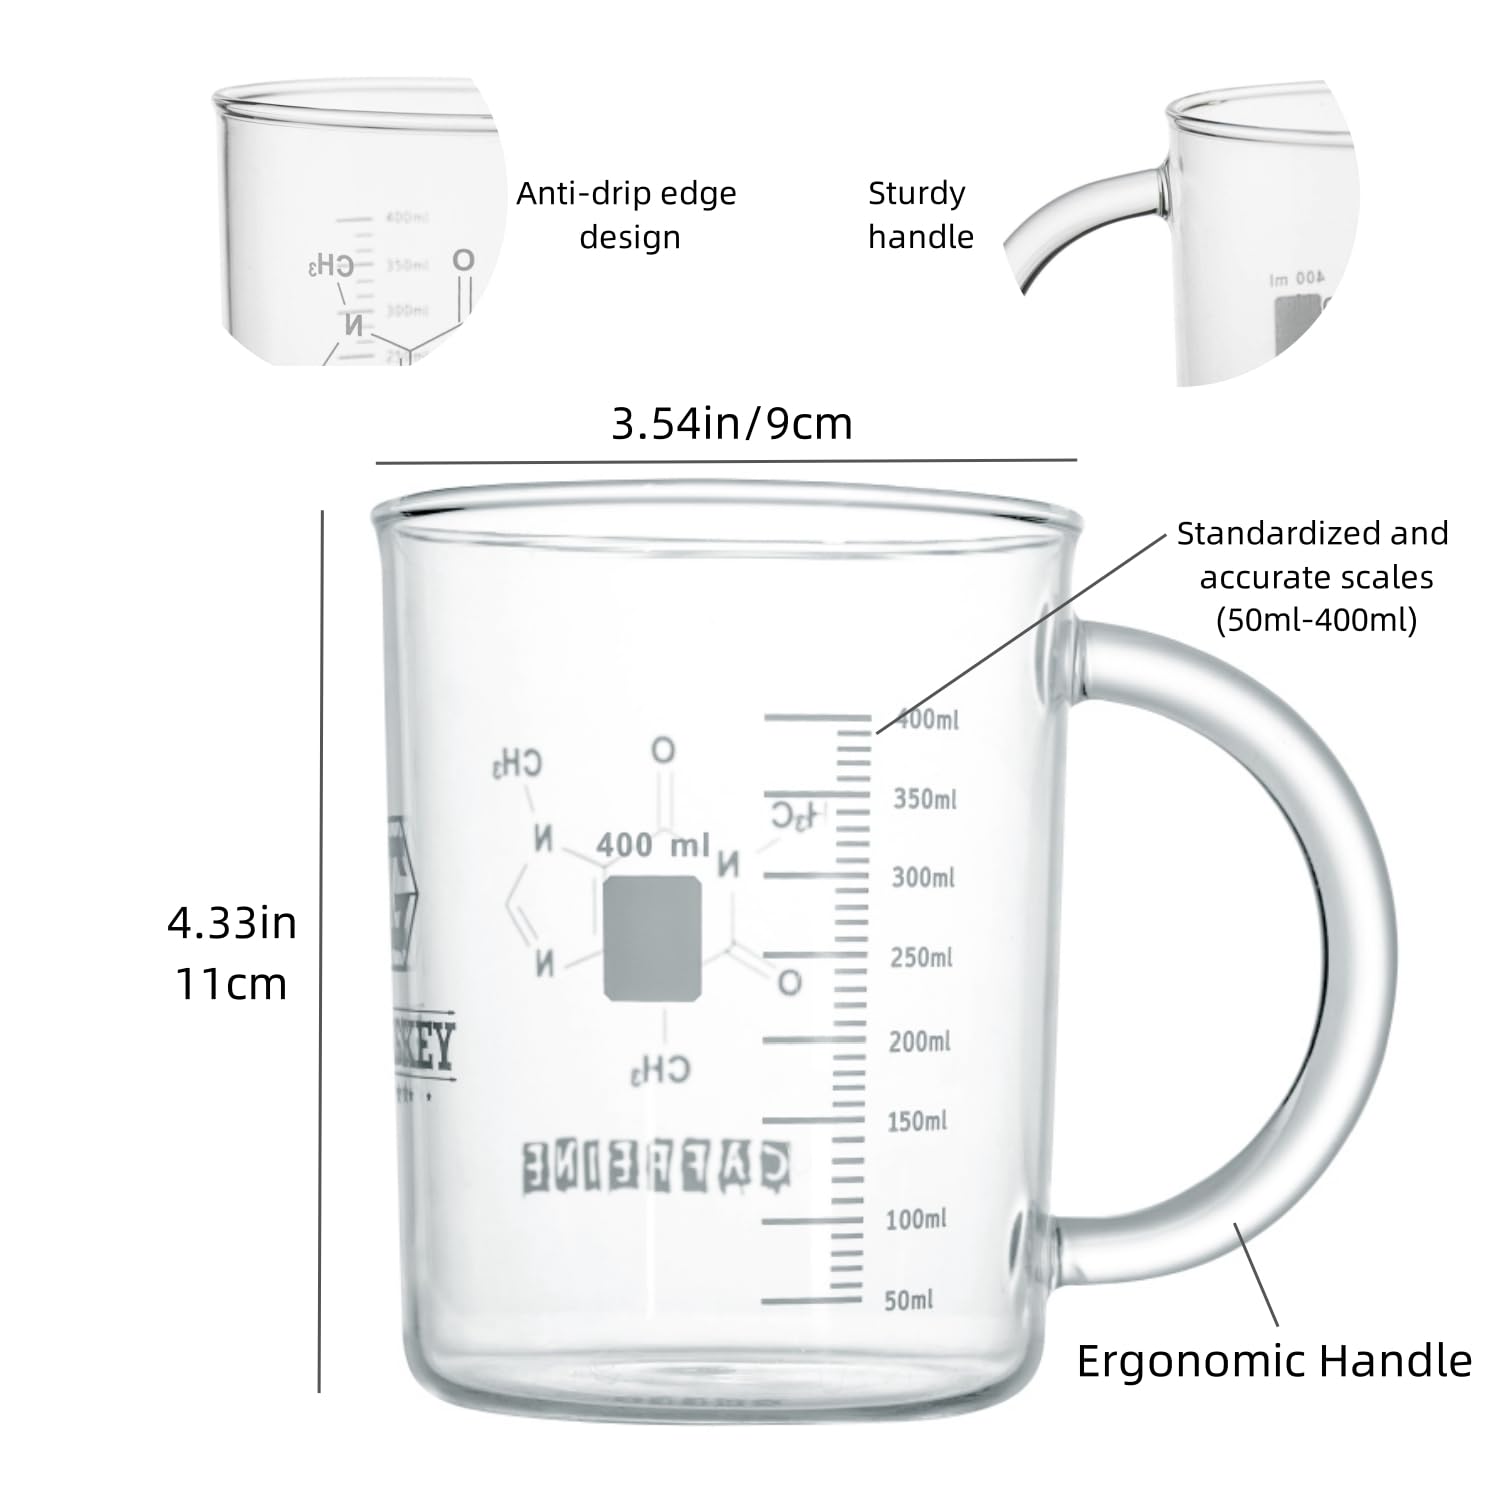 GLASKEY Caffeine Beaker Mug,16 oz Anti-dripping Borosilicate Caffeine Mug,Cool Coffee Mugs with Handle,Chemistry Mug,Measuring for Coffee,Tea,Hot and Cold Beverage